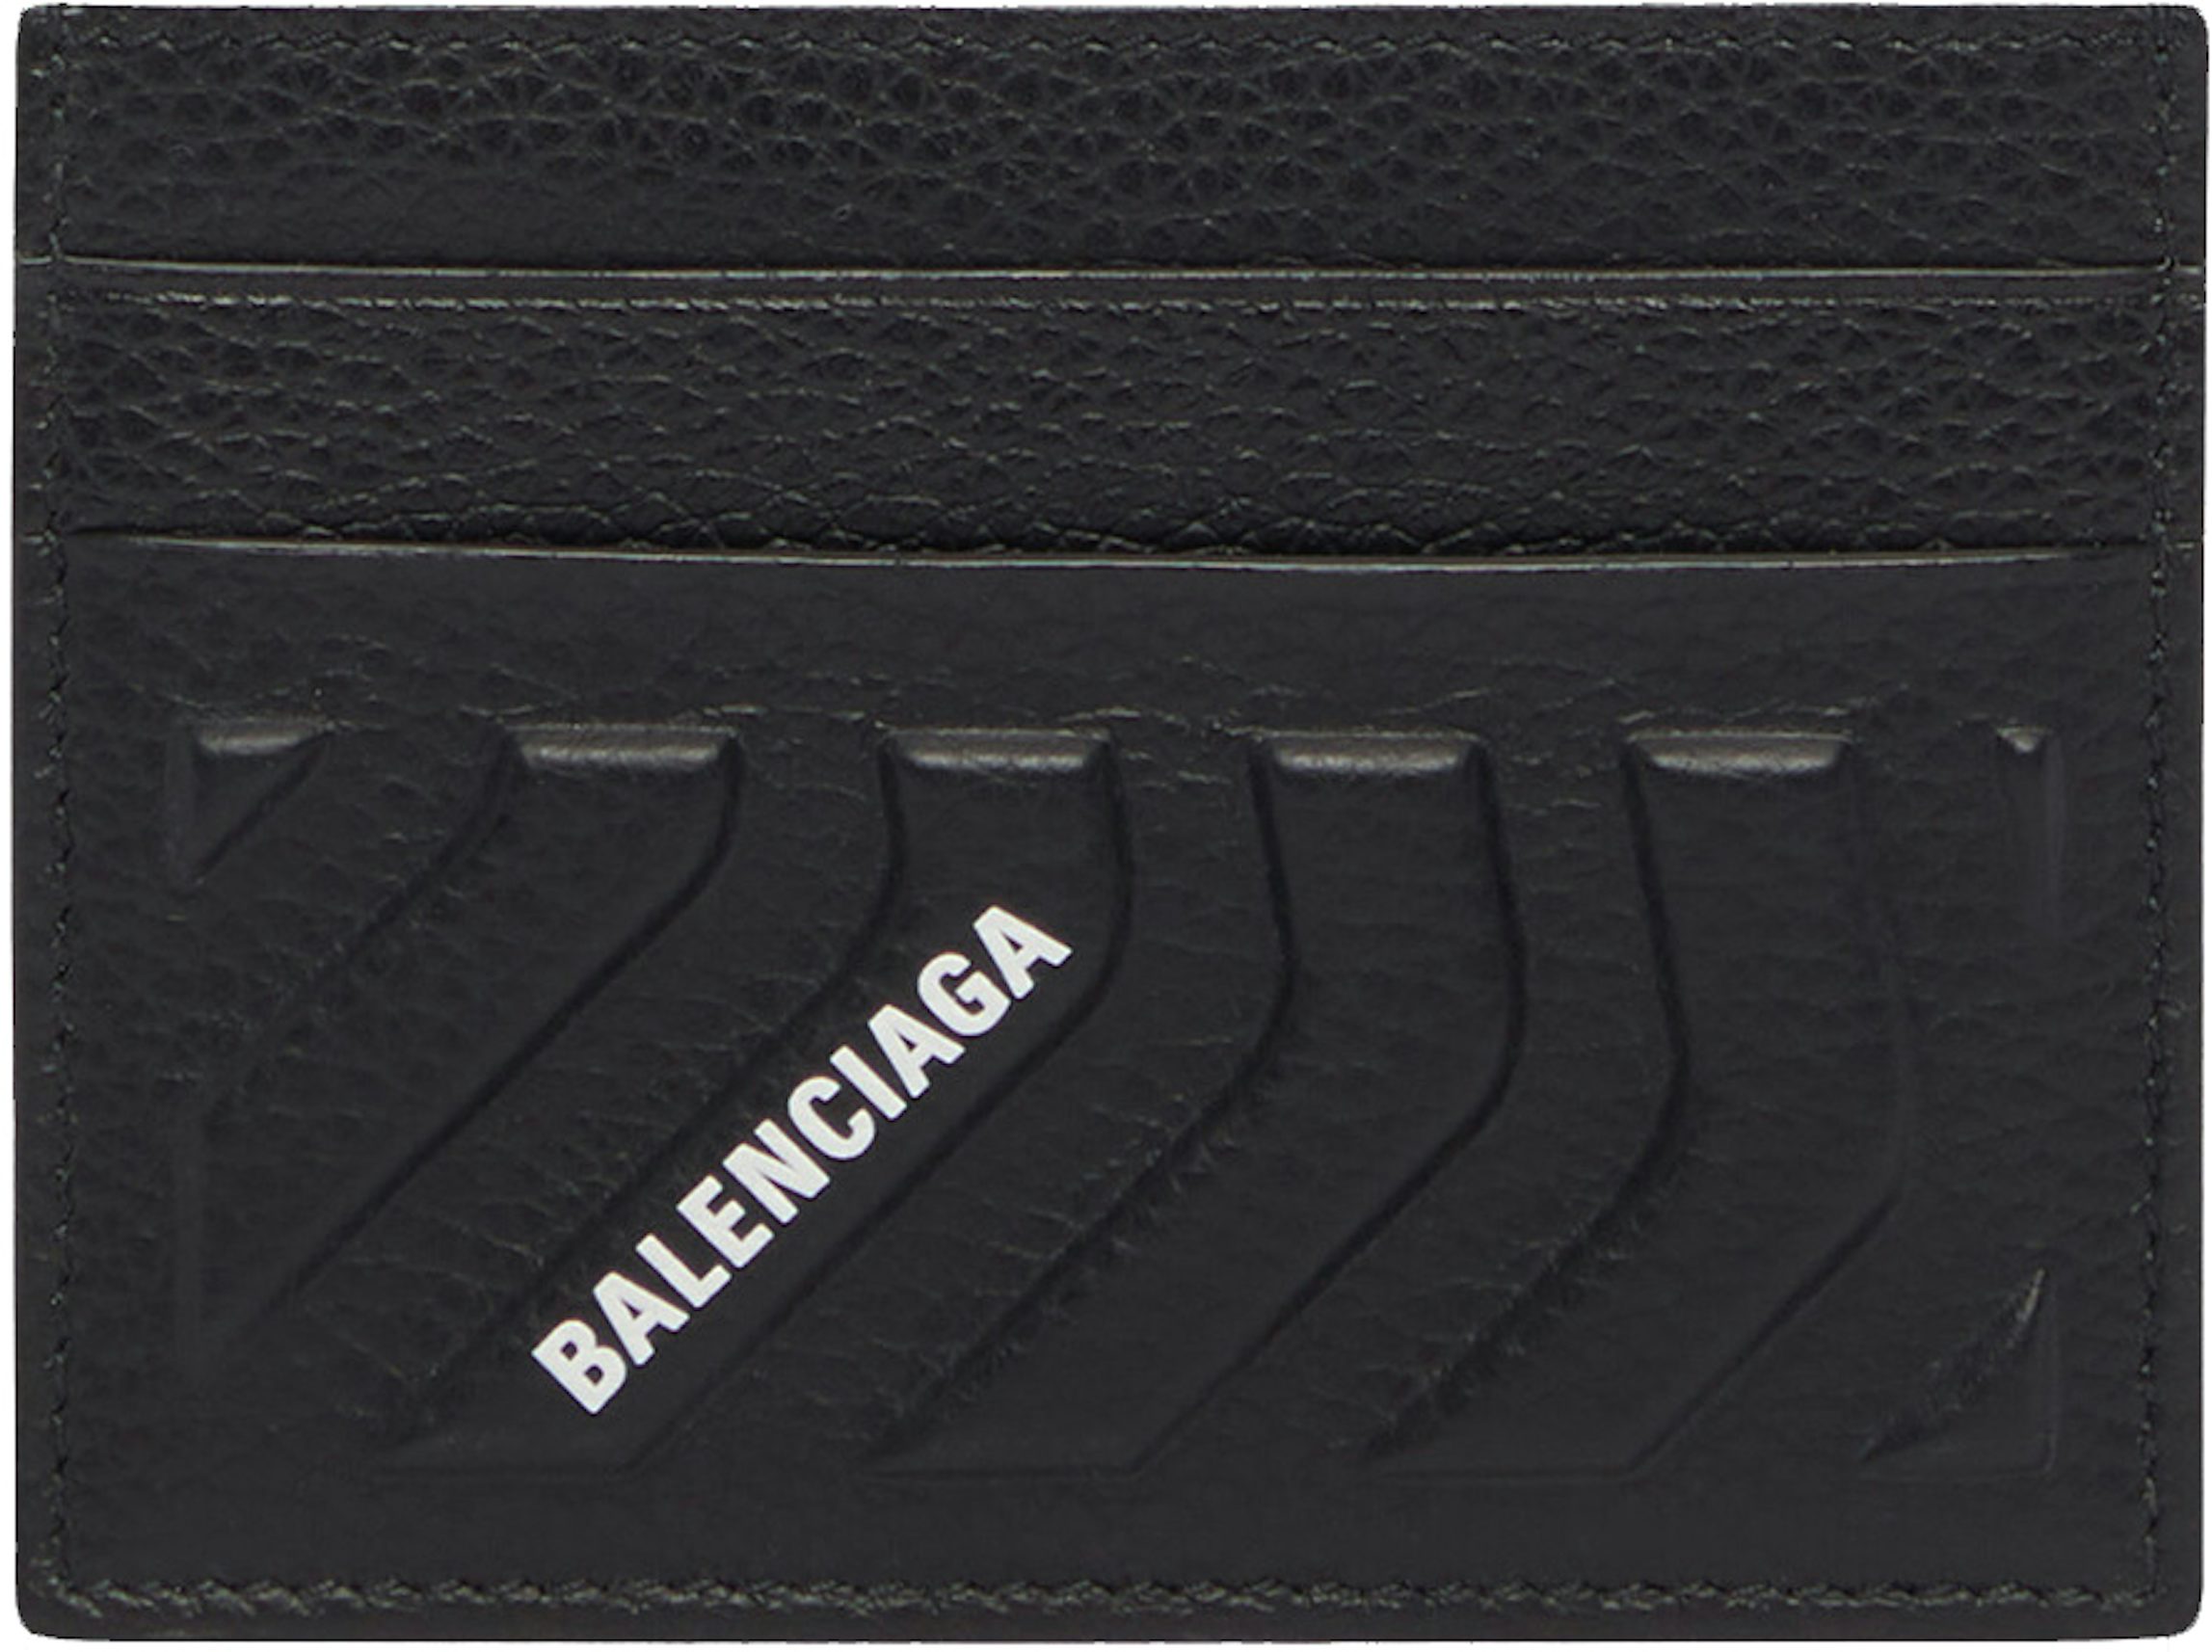 Buy Balenciaga City Accessories - StockX